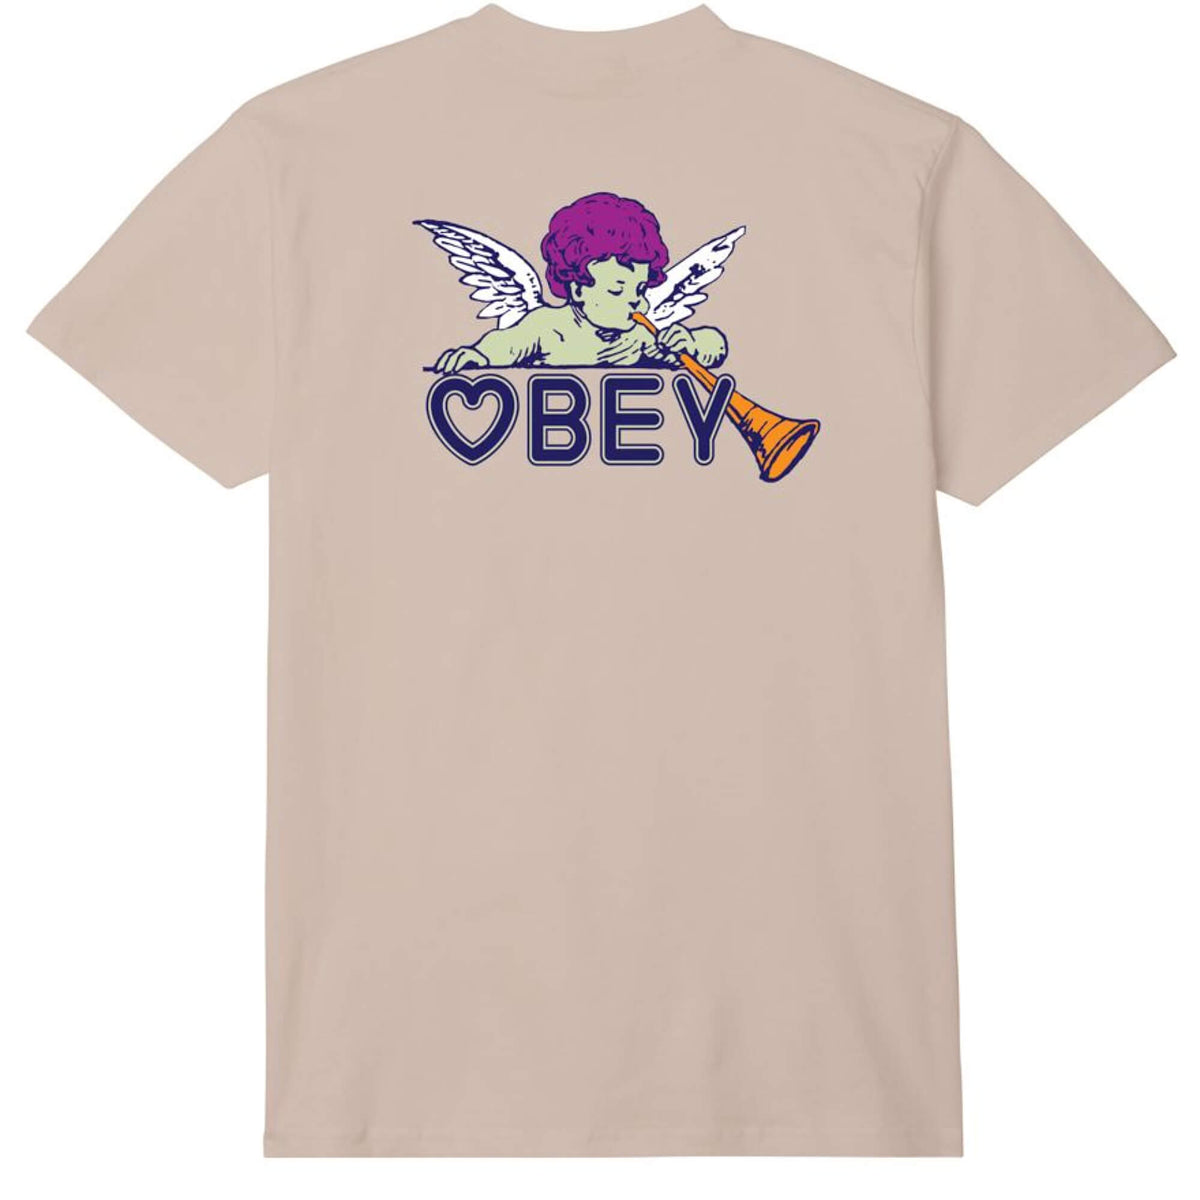 OBEY Baby Angel Skateboarding T-Shirt Sand